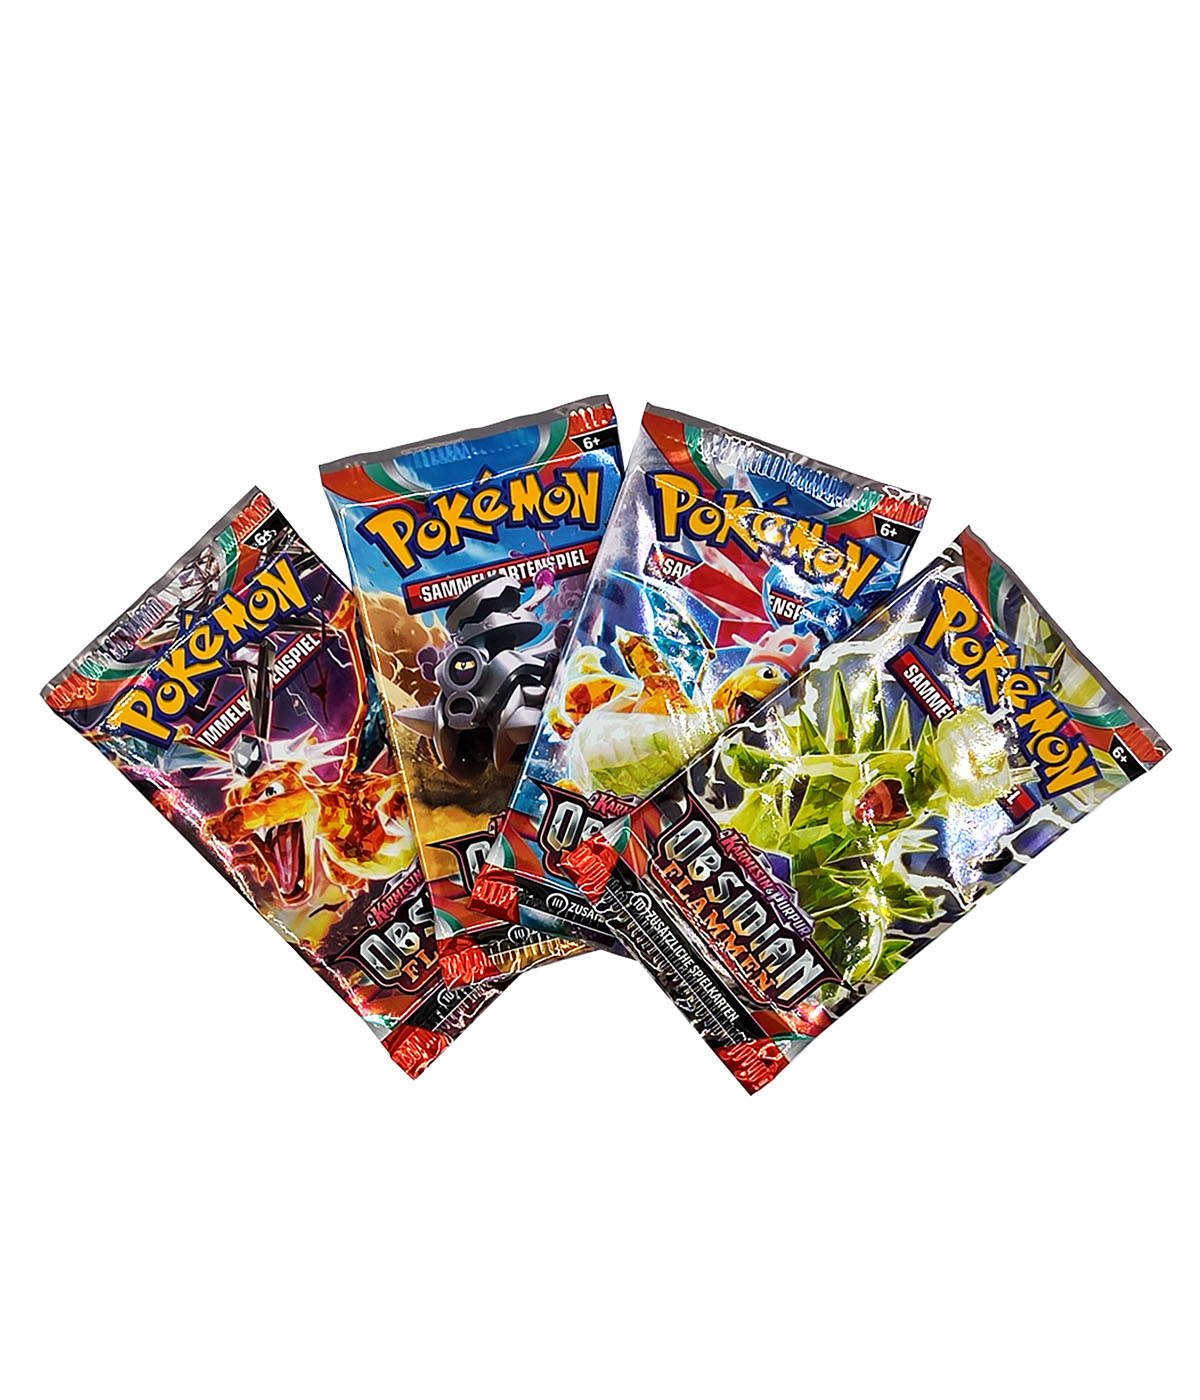 Pokémon "Obsidianflammen" - 3 Displays mit je 18 Boosterpacks